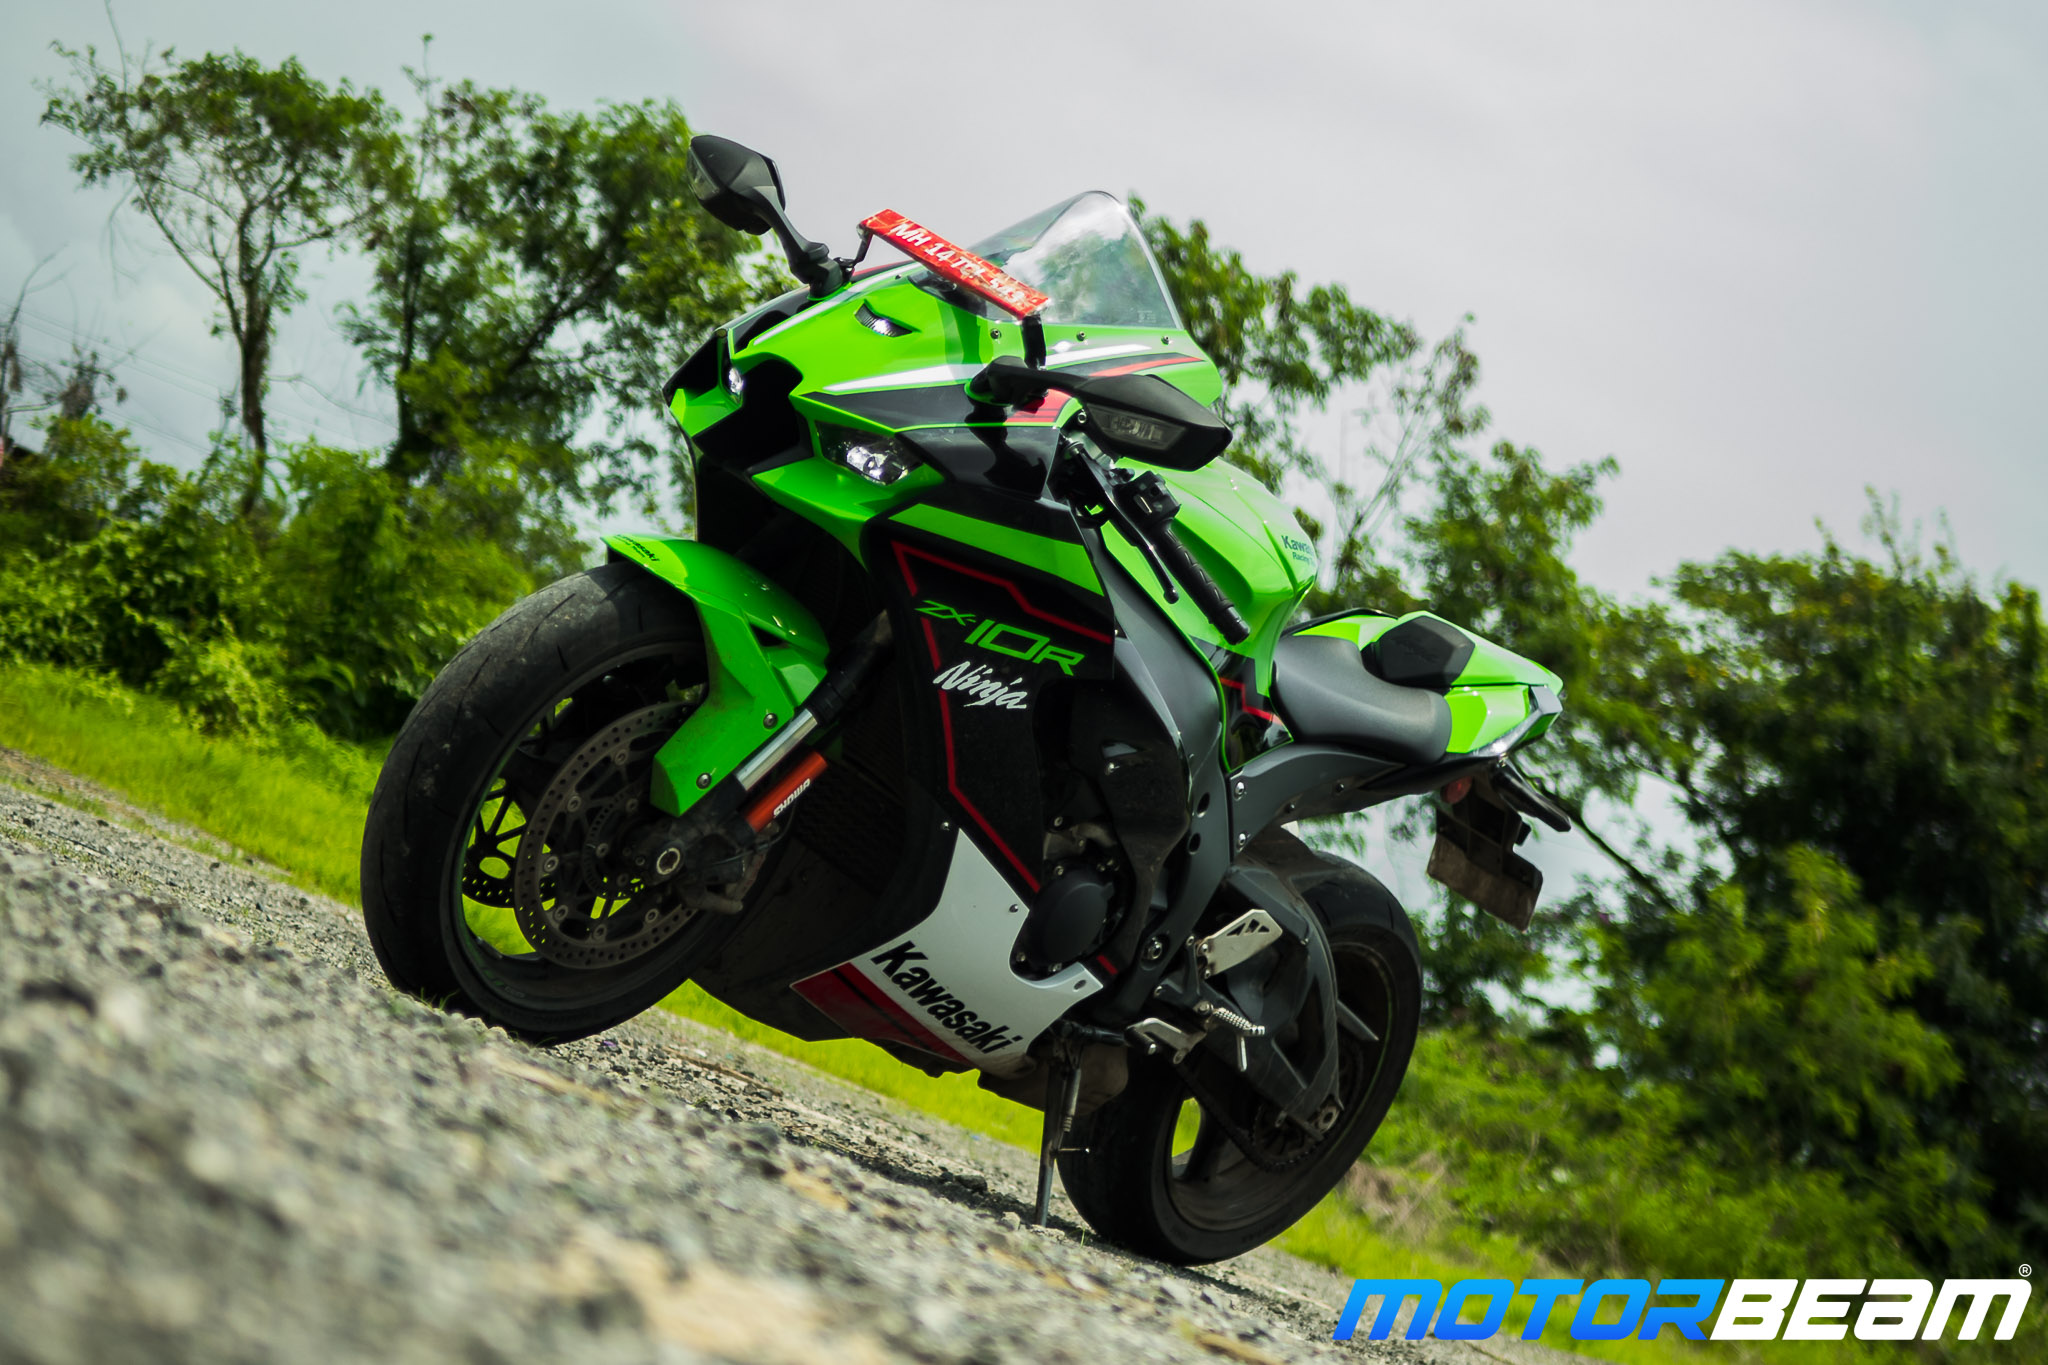 ligegyldighed Vurdering Pak at lægge 2021 Kawasaki Ninja ZX-10R Review Test Ride | MotorBeam